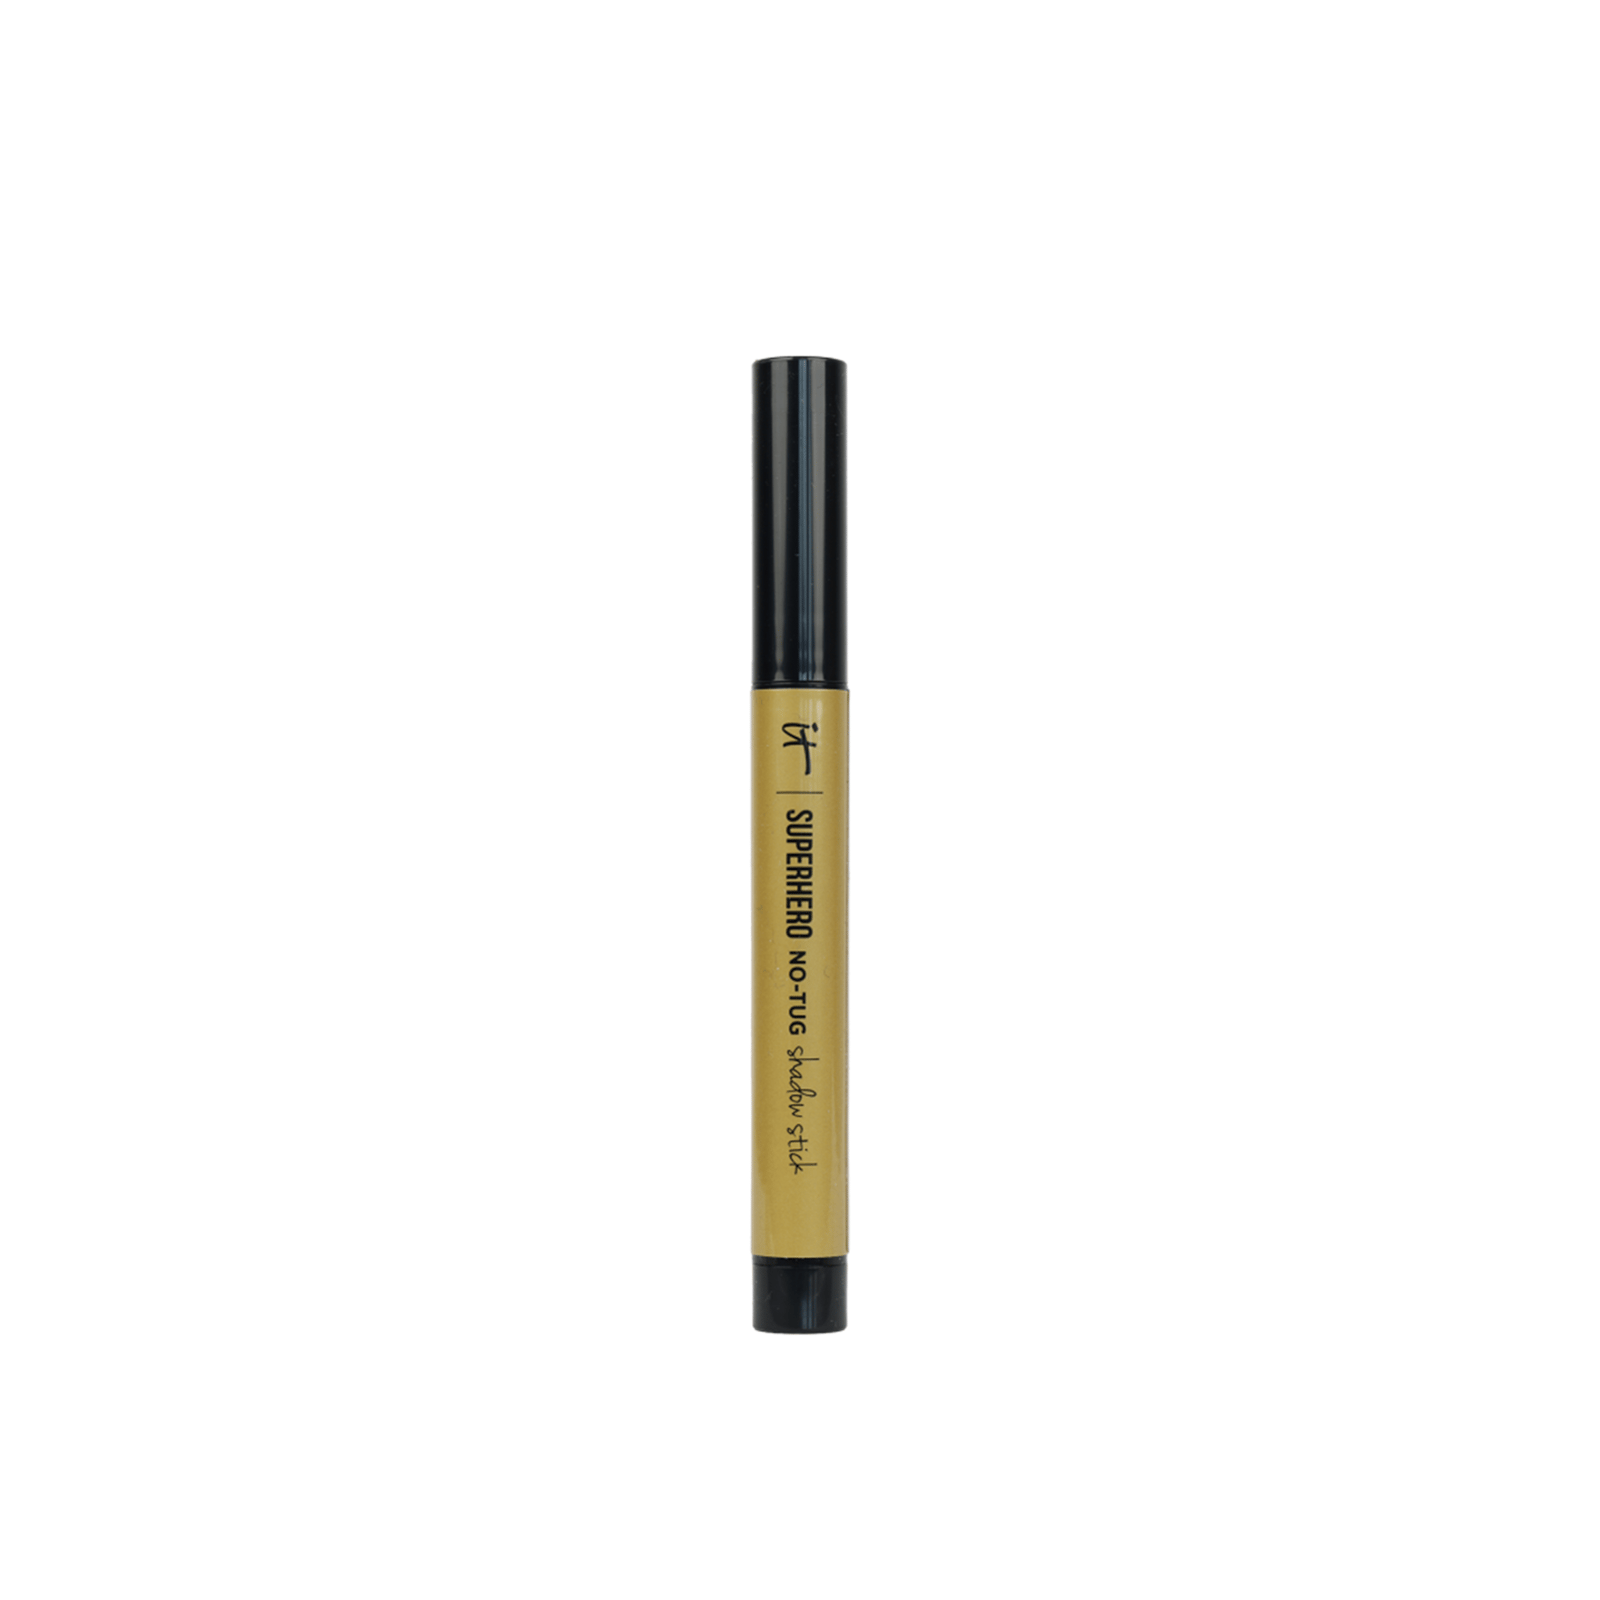 IT Cosmetics Superhero No-Tug Shadow Stick Gallant Gold 1.61g (0.05oz)